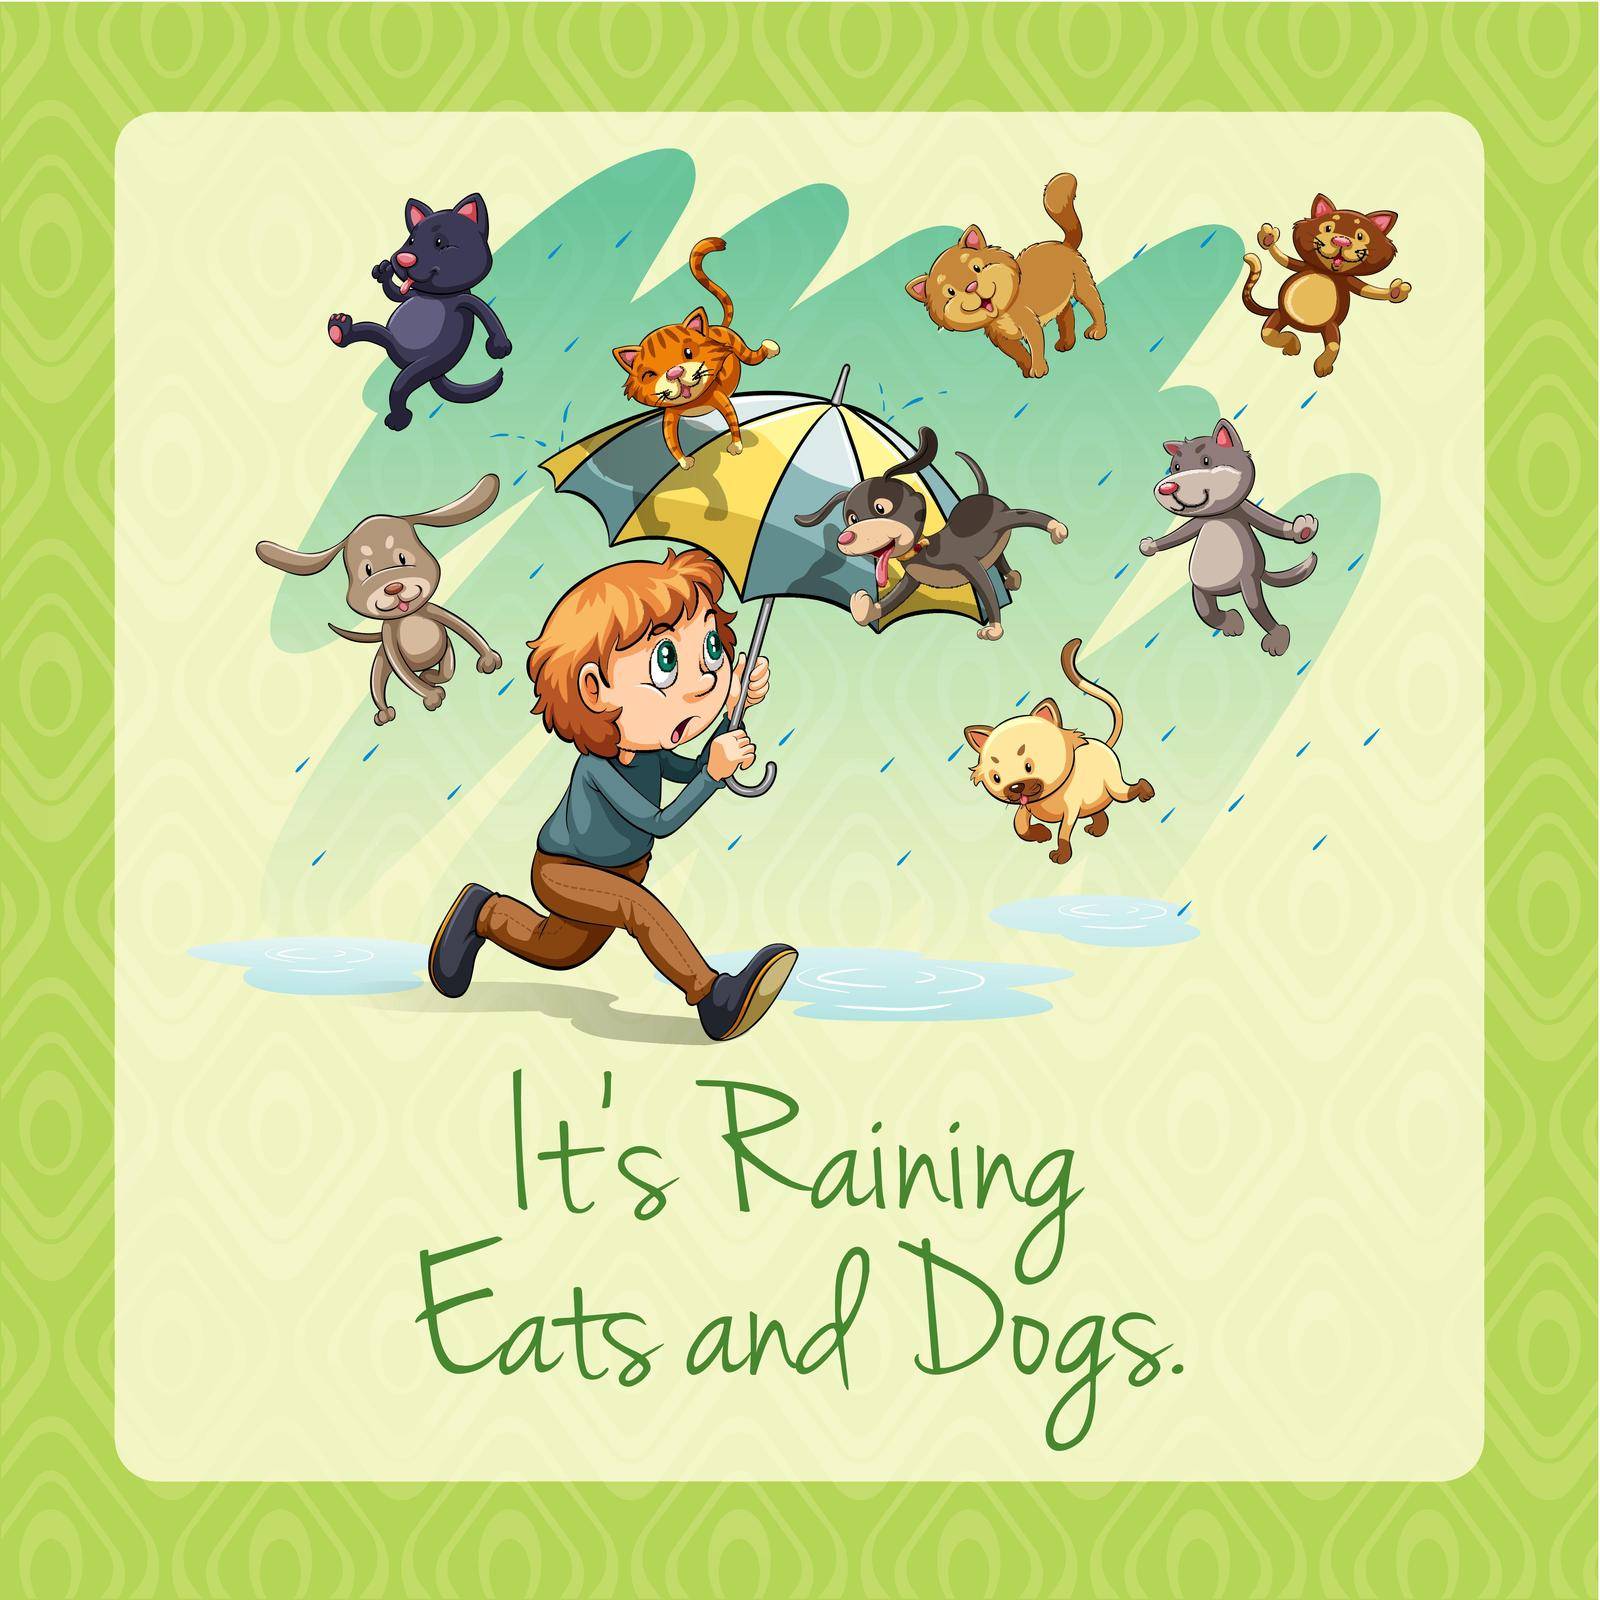 It's raining cats and dogs idiom illustration